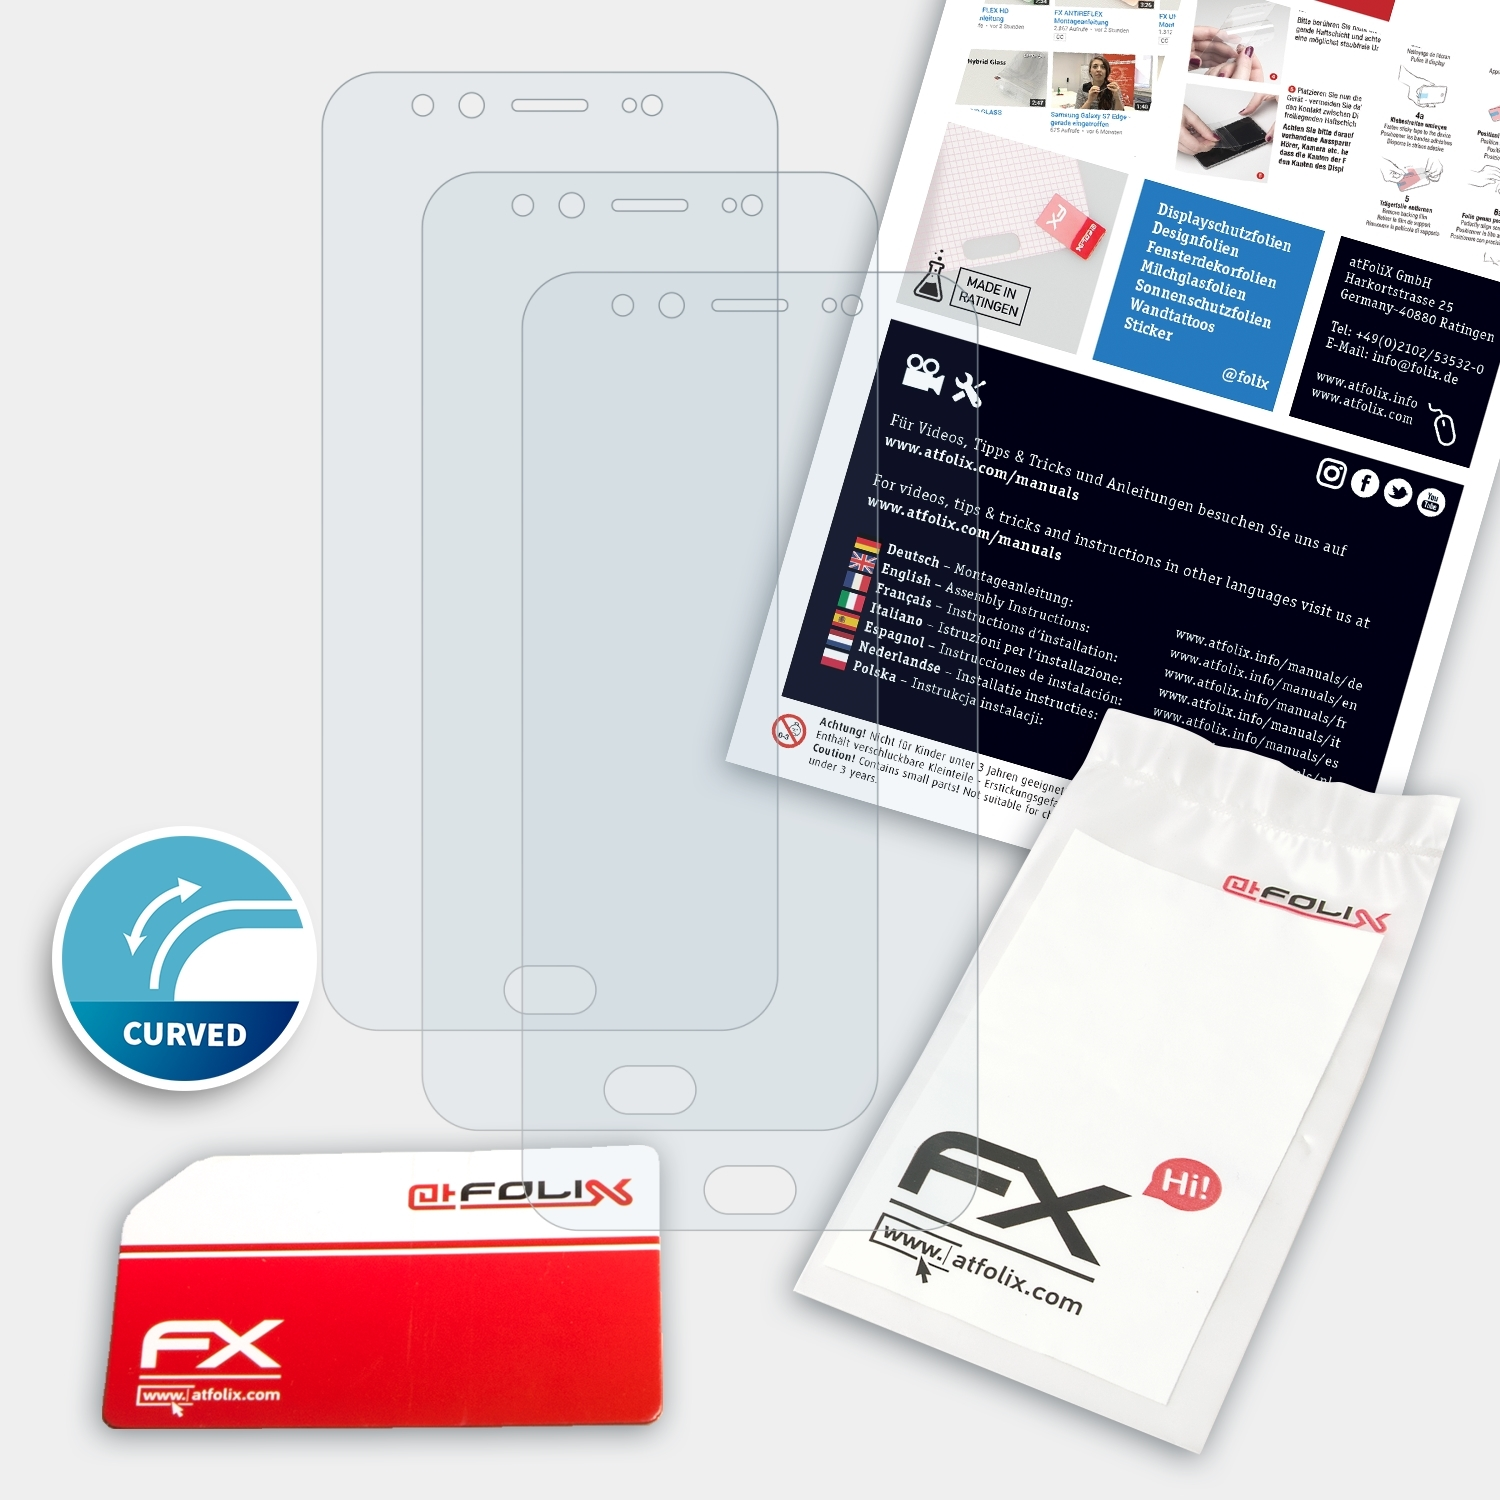 ATFOLIX 3x FX-ActiFleX Displayschutz(für V5 Plus) Vivo